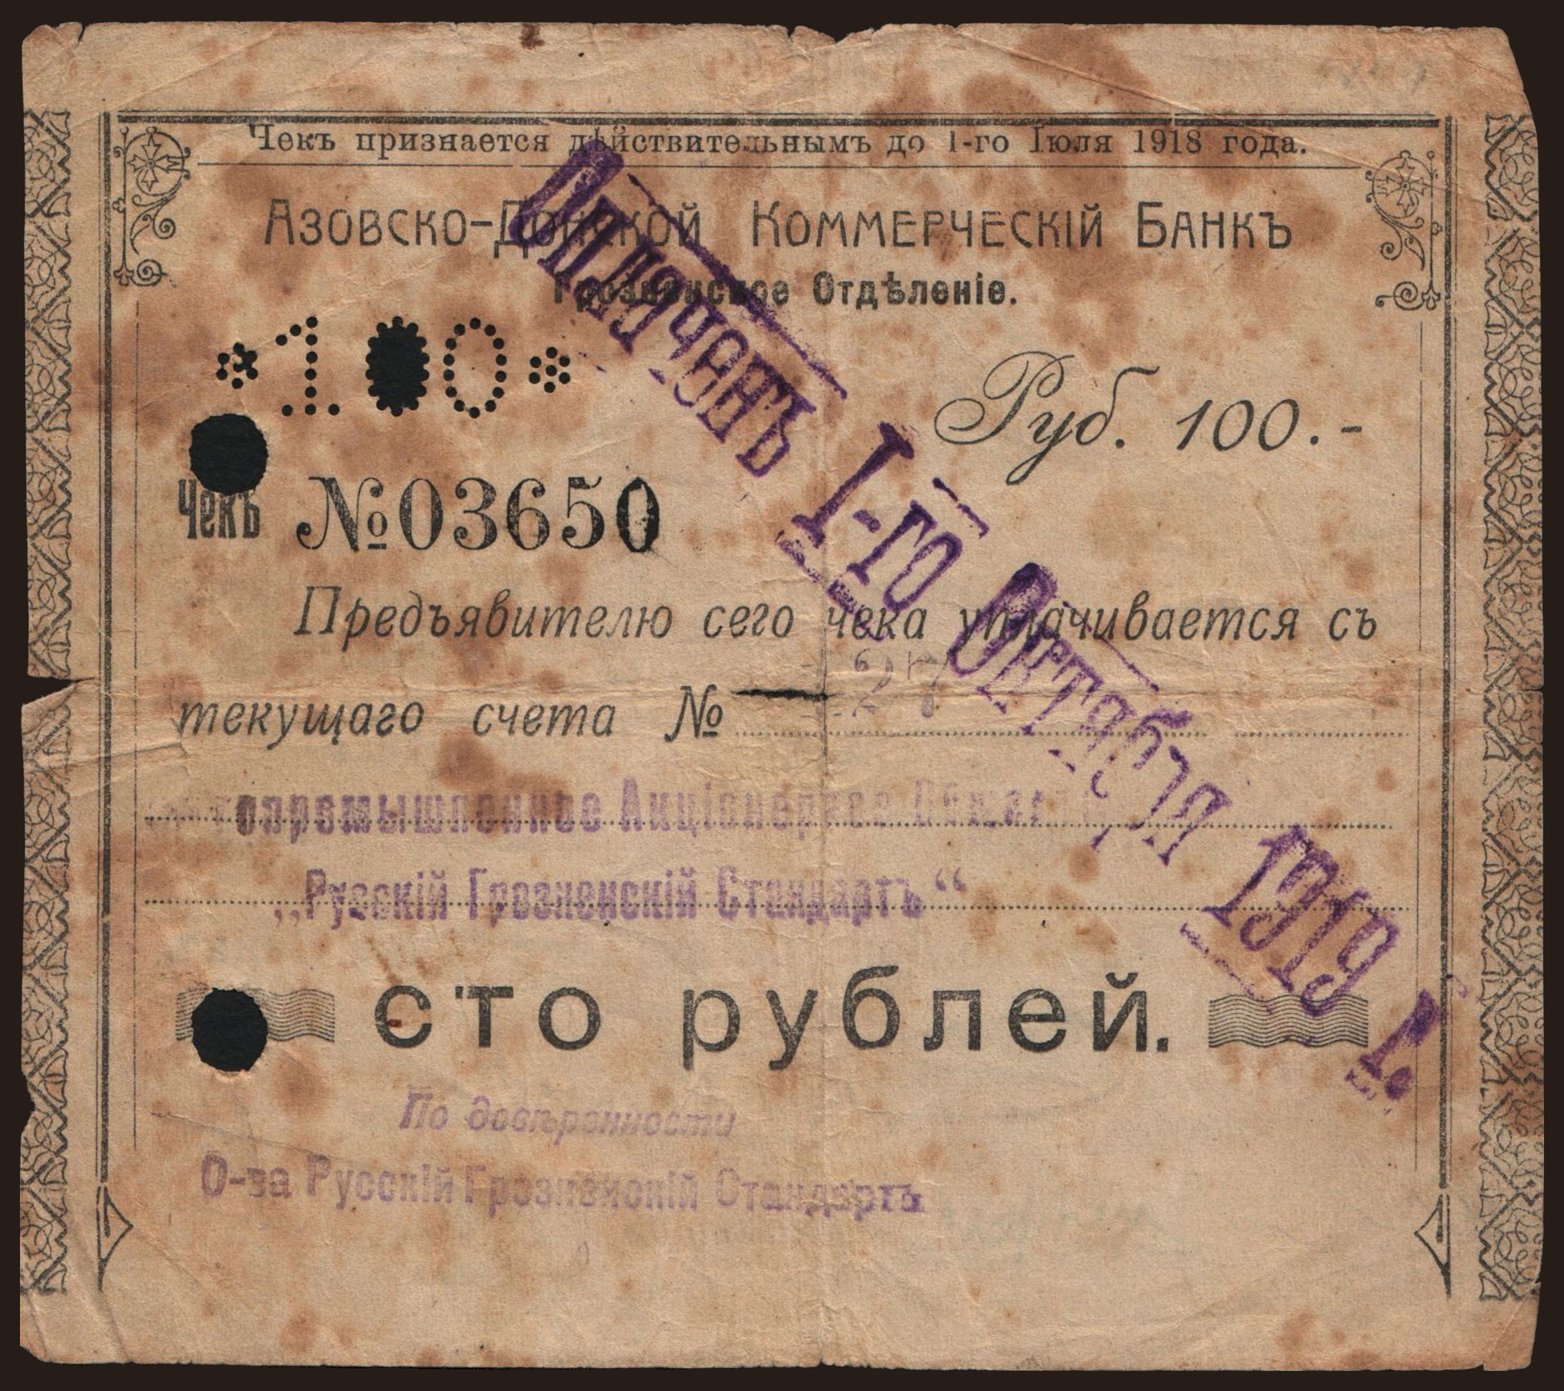 Grozny/ Azov-Don Commercial Bank, 100 rubel, 1918